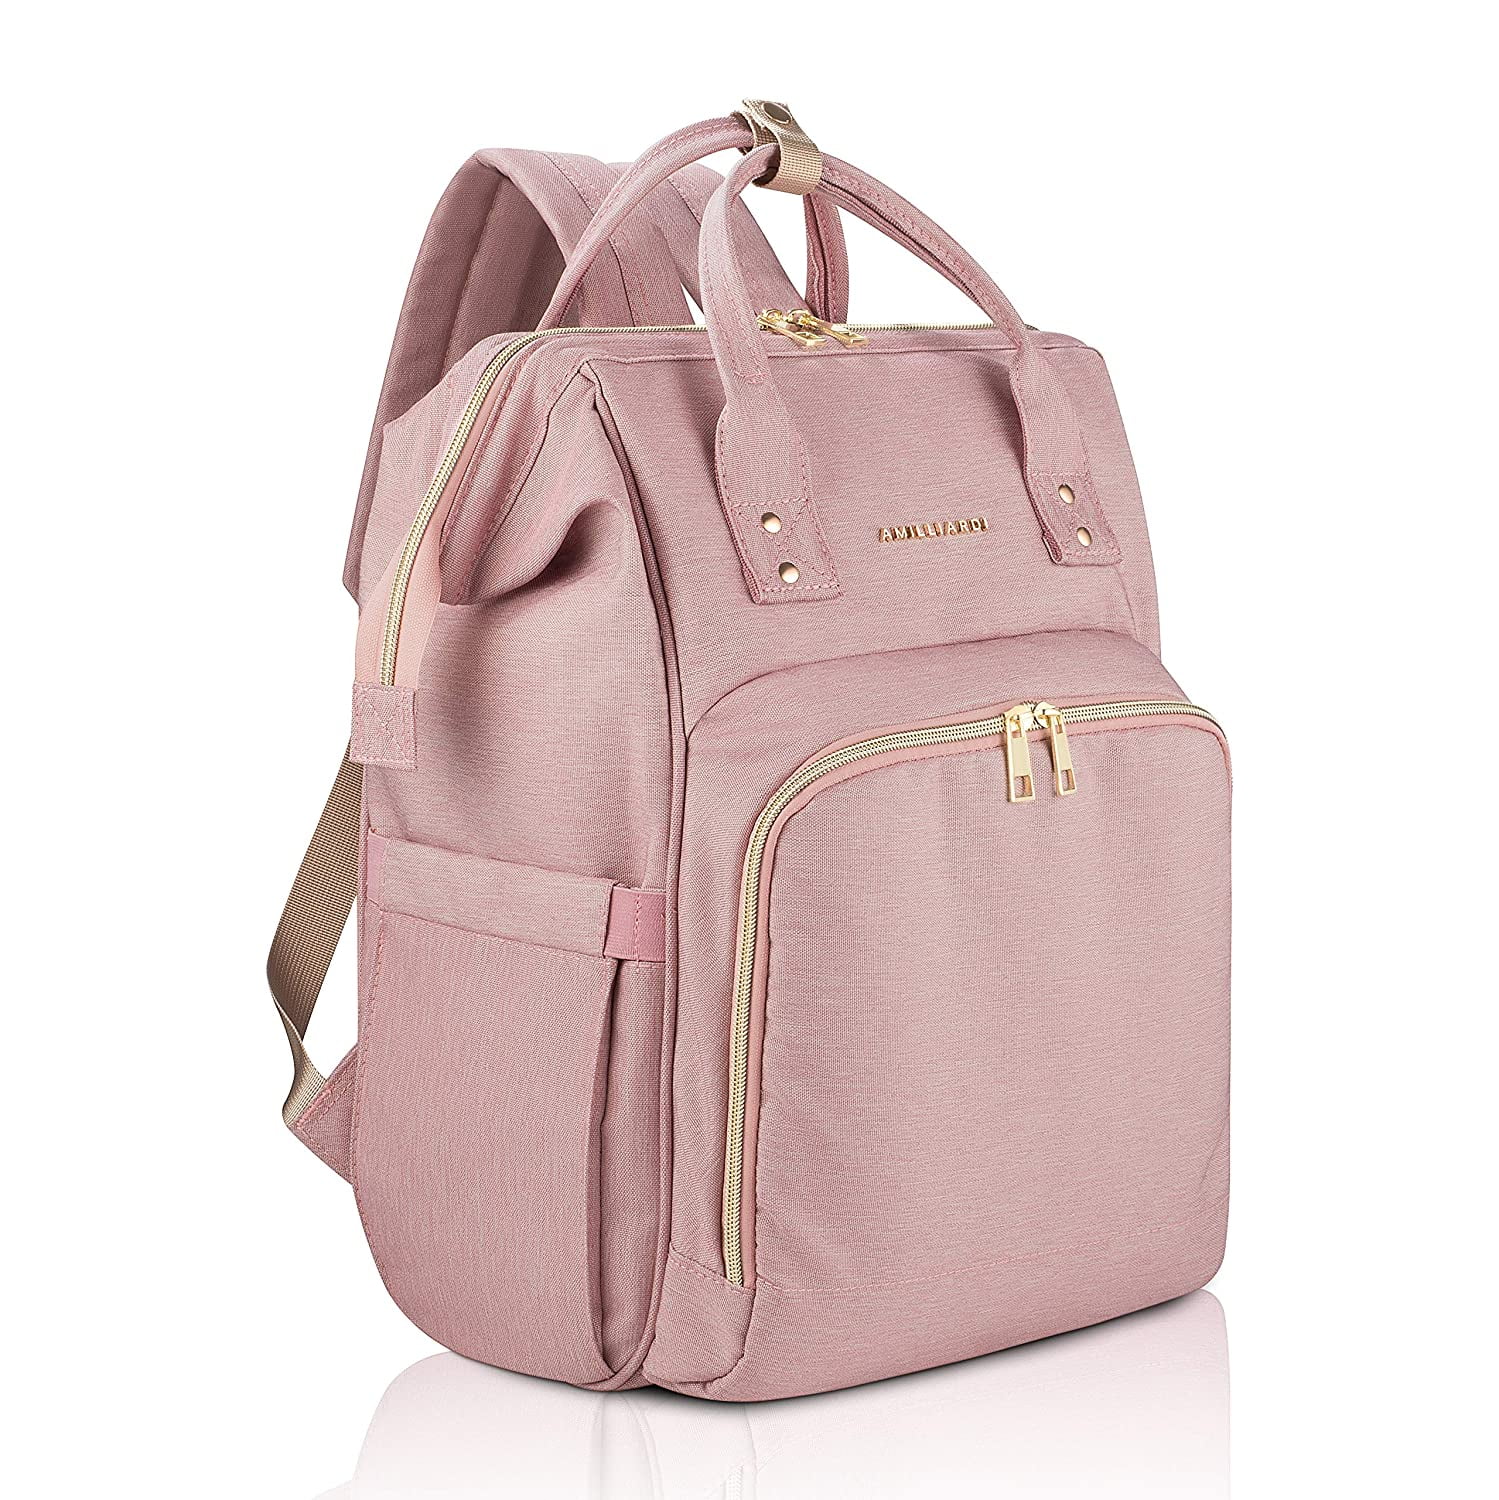 Amilliardi Diaper Bag Backpack - 2 Insulated Bottle Holders - Detachable Stroller Straps - Caramel Vegan Leather - Small